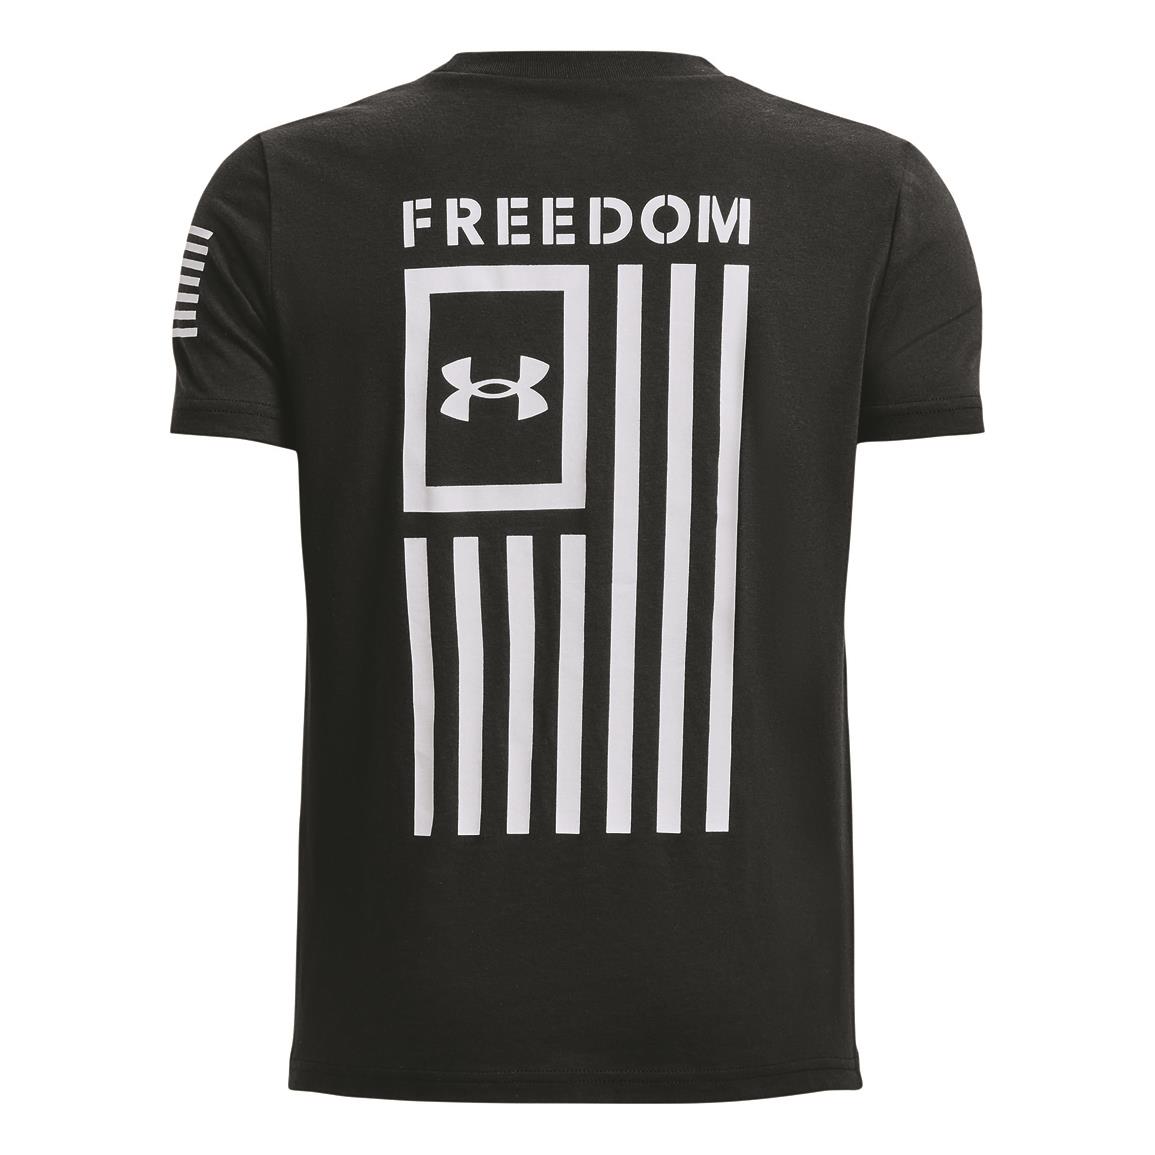 Under Armour Boys' Freedom Flag T-Shirt, Black